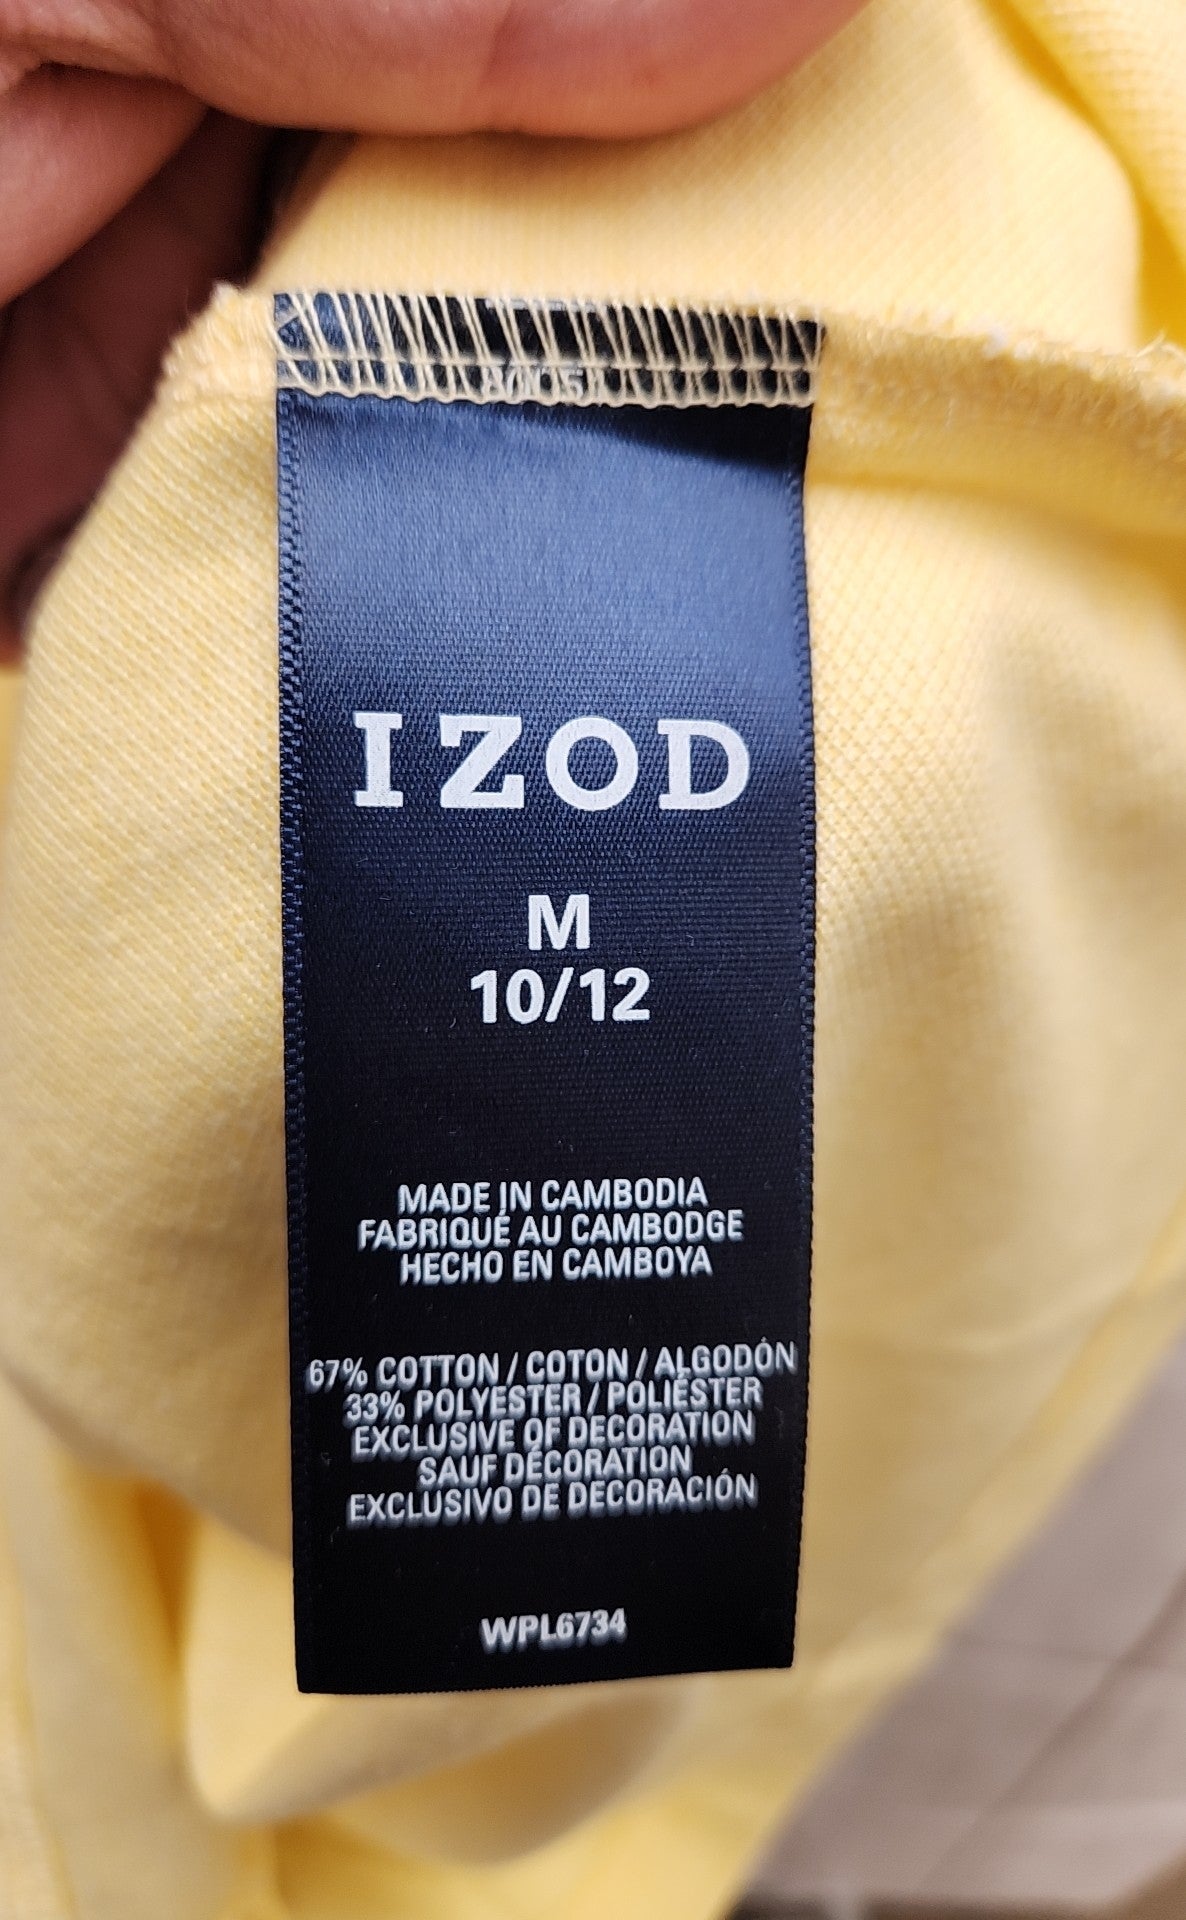 Izod Boy's Size 10/12 Yellow Shirt